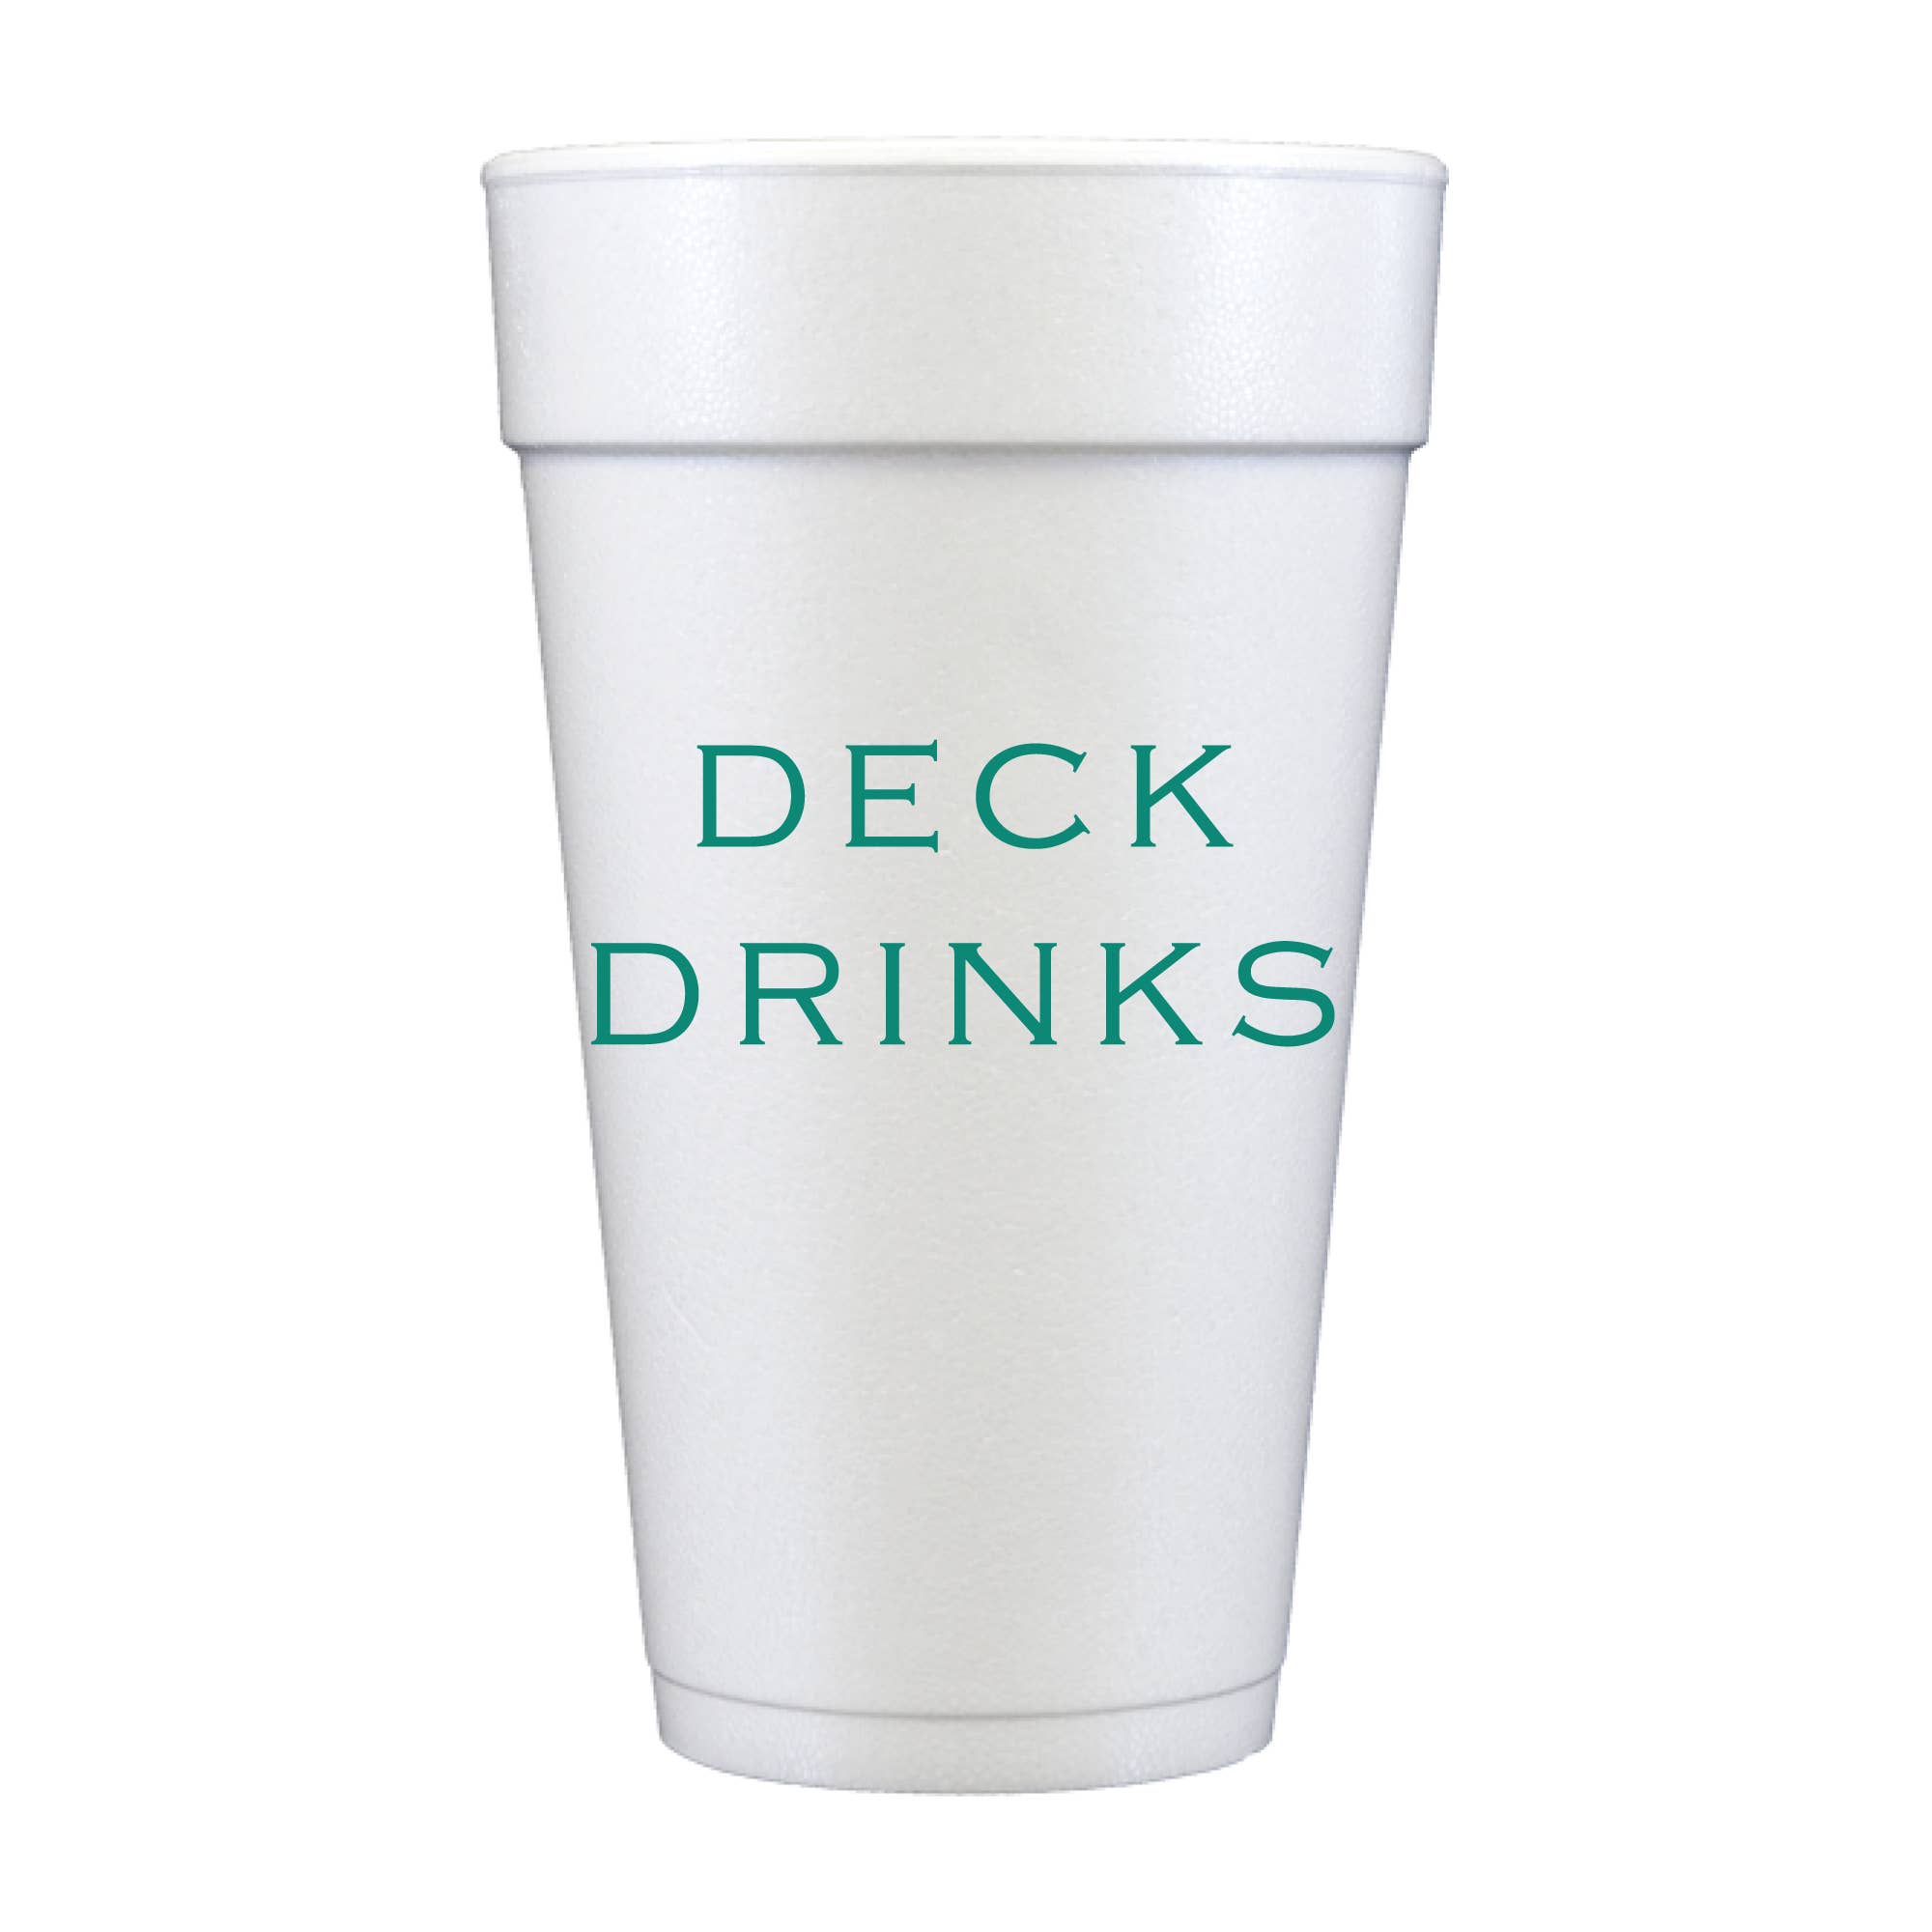 Deck Drinks Foam Cups - The Preppy Bunny